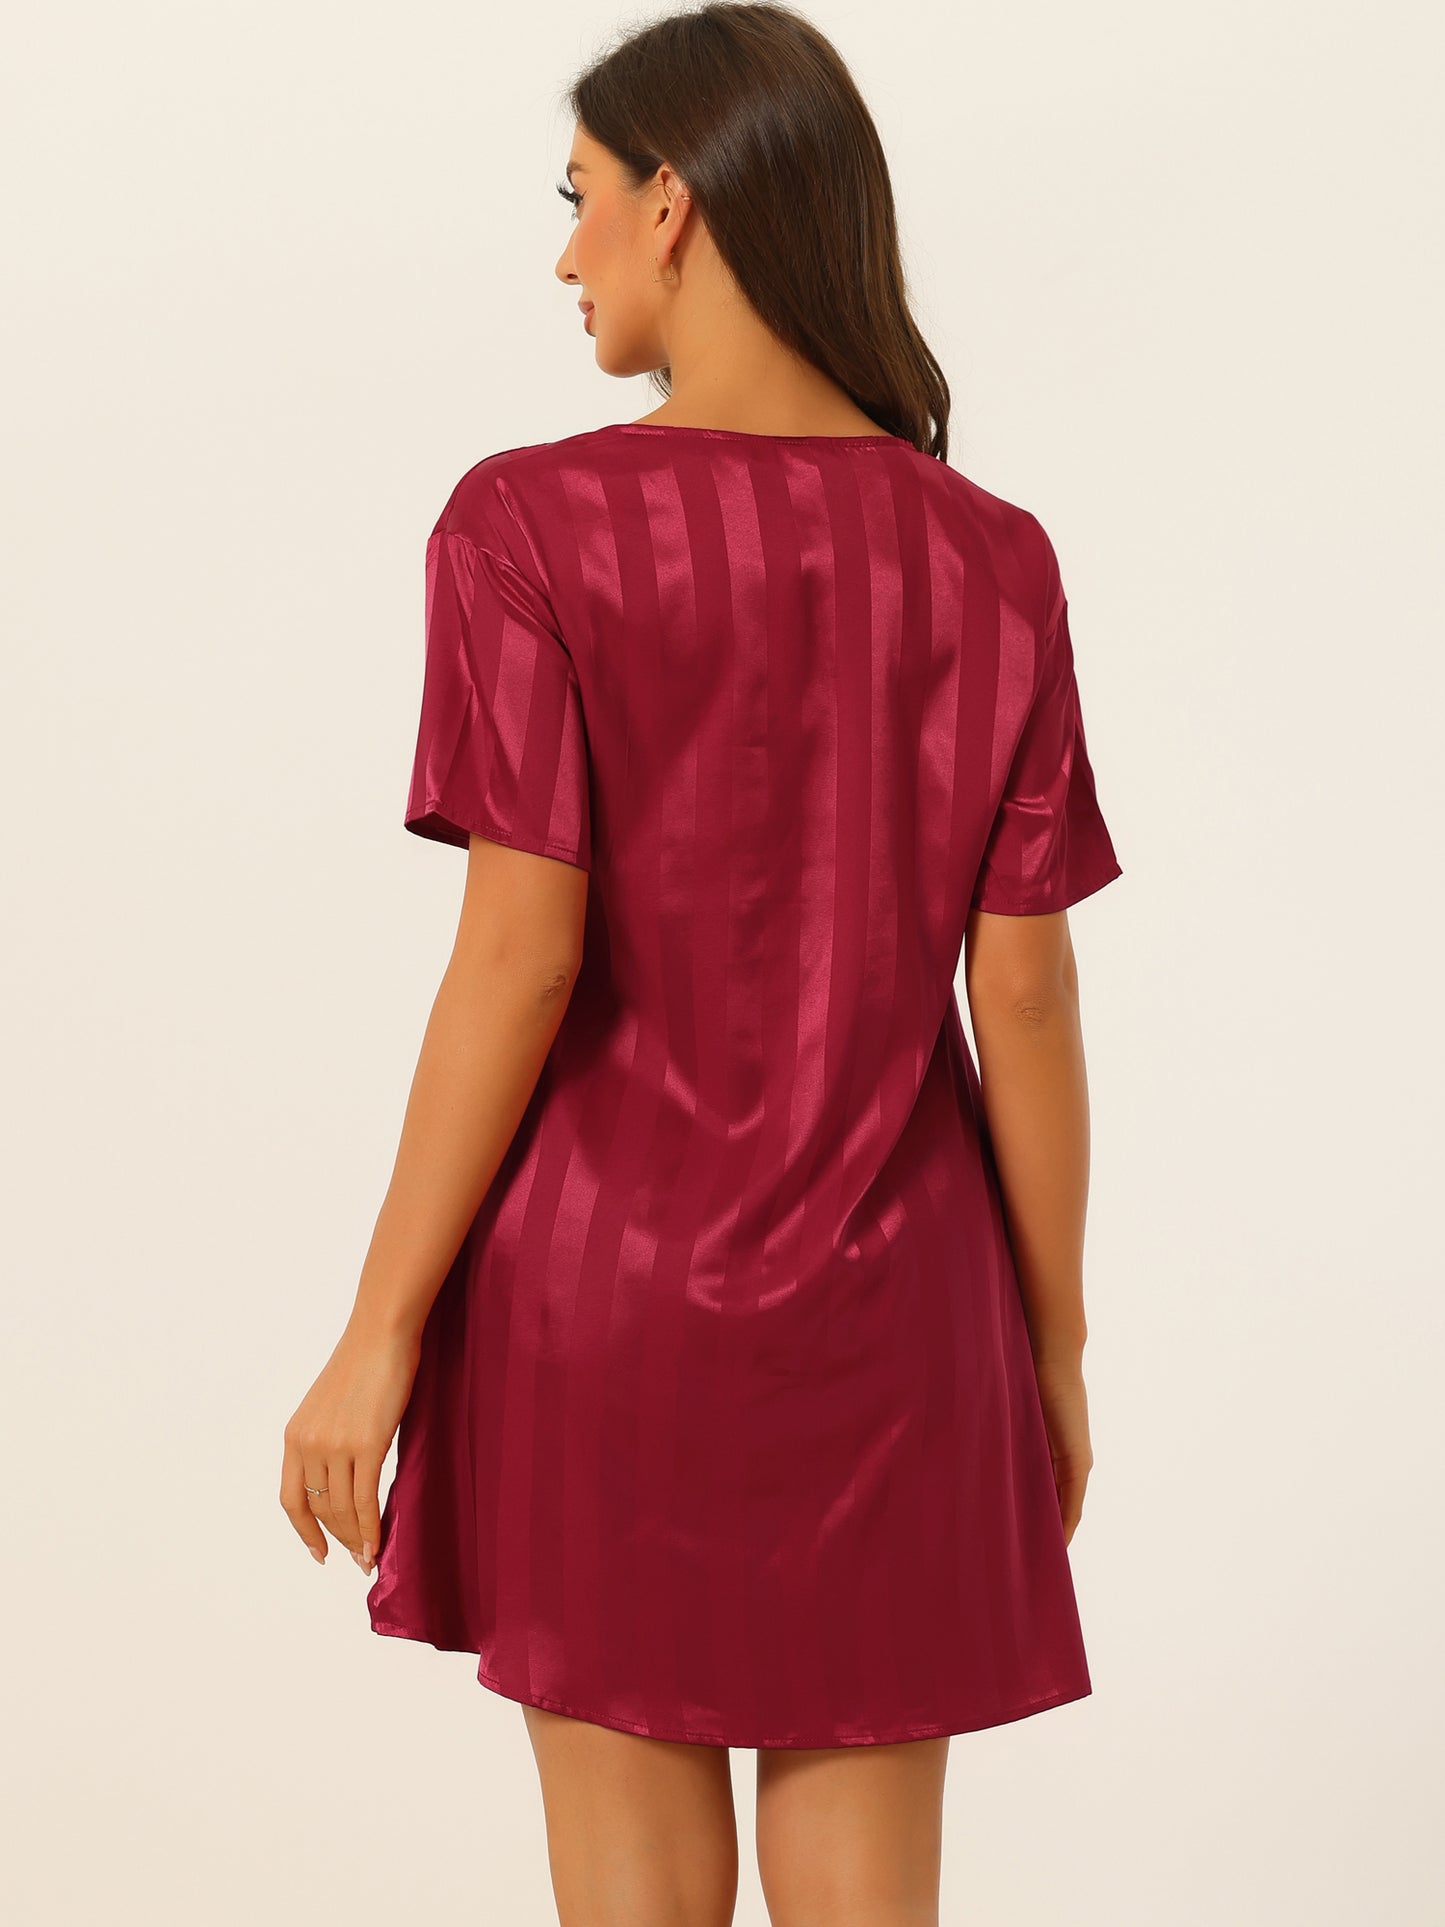 cheibear Pajamas Satin Dress Nightshirt Short Sleeves Lounge Sleepwear Nightgown Wine Red